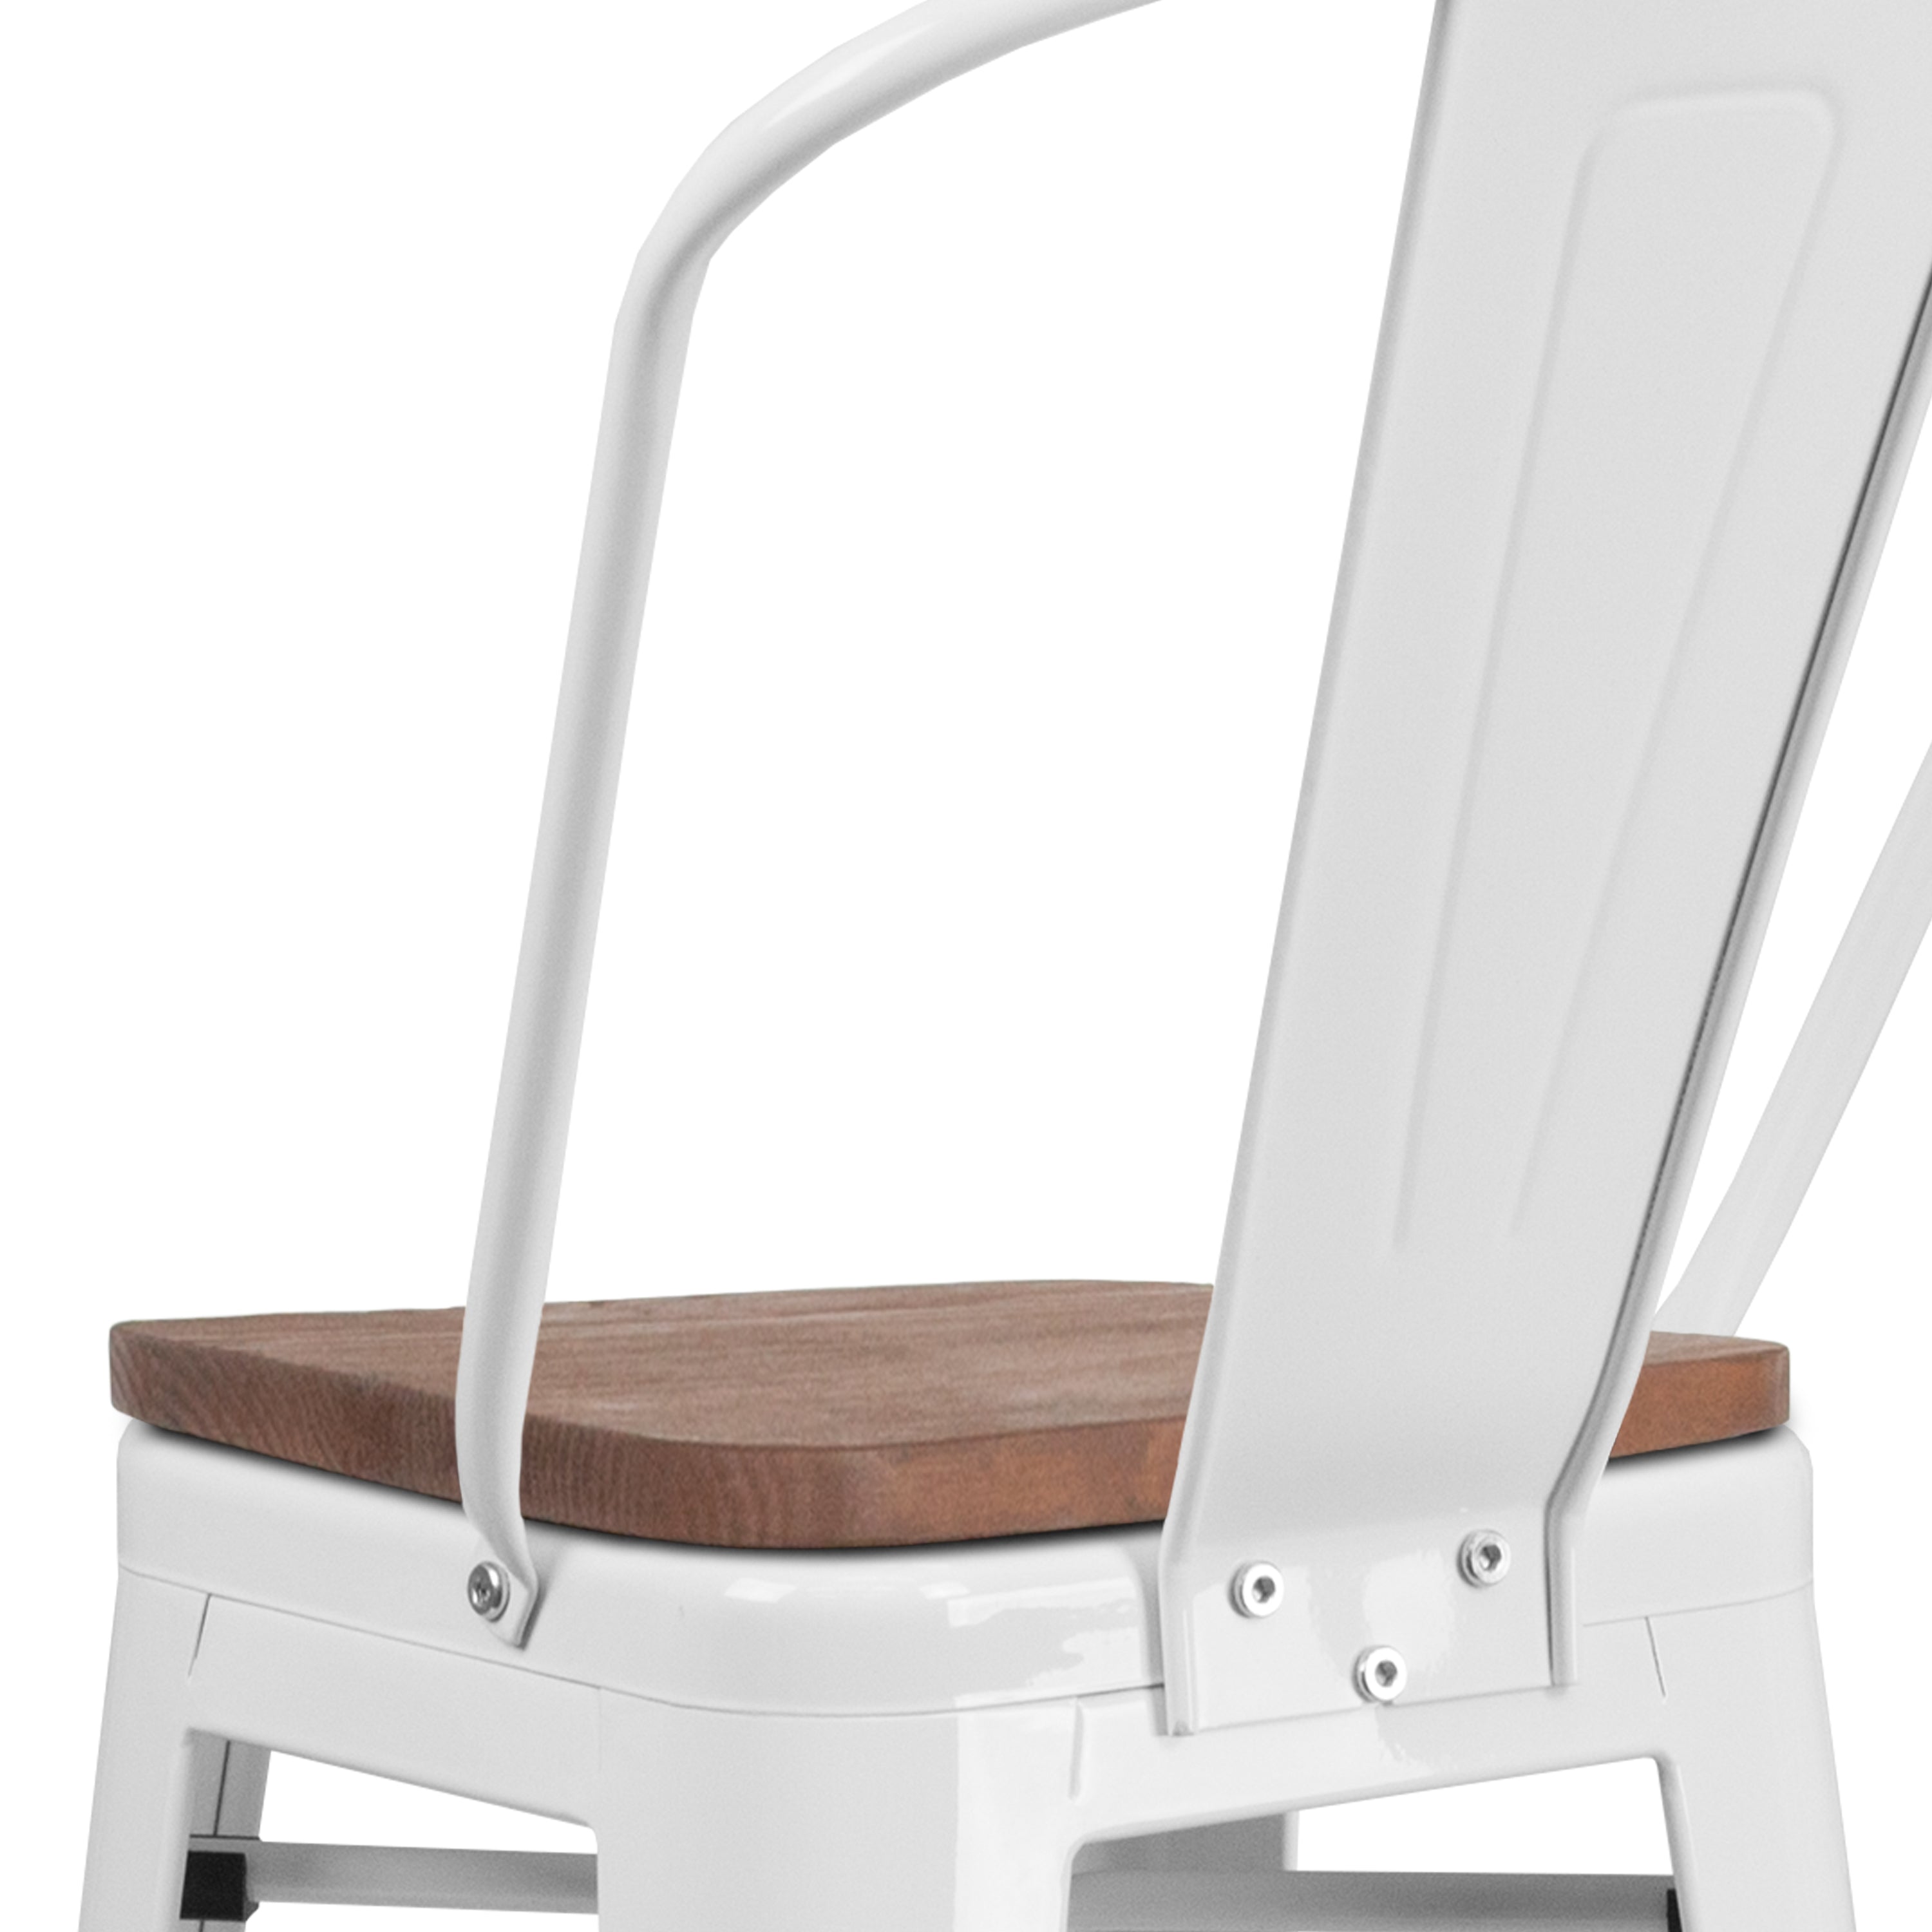 30" High Metal Barstool with Back and Wood Seat-Bar Stool-Flash Furniture-Wall2Wall Furnishings